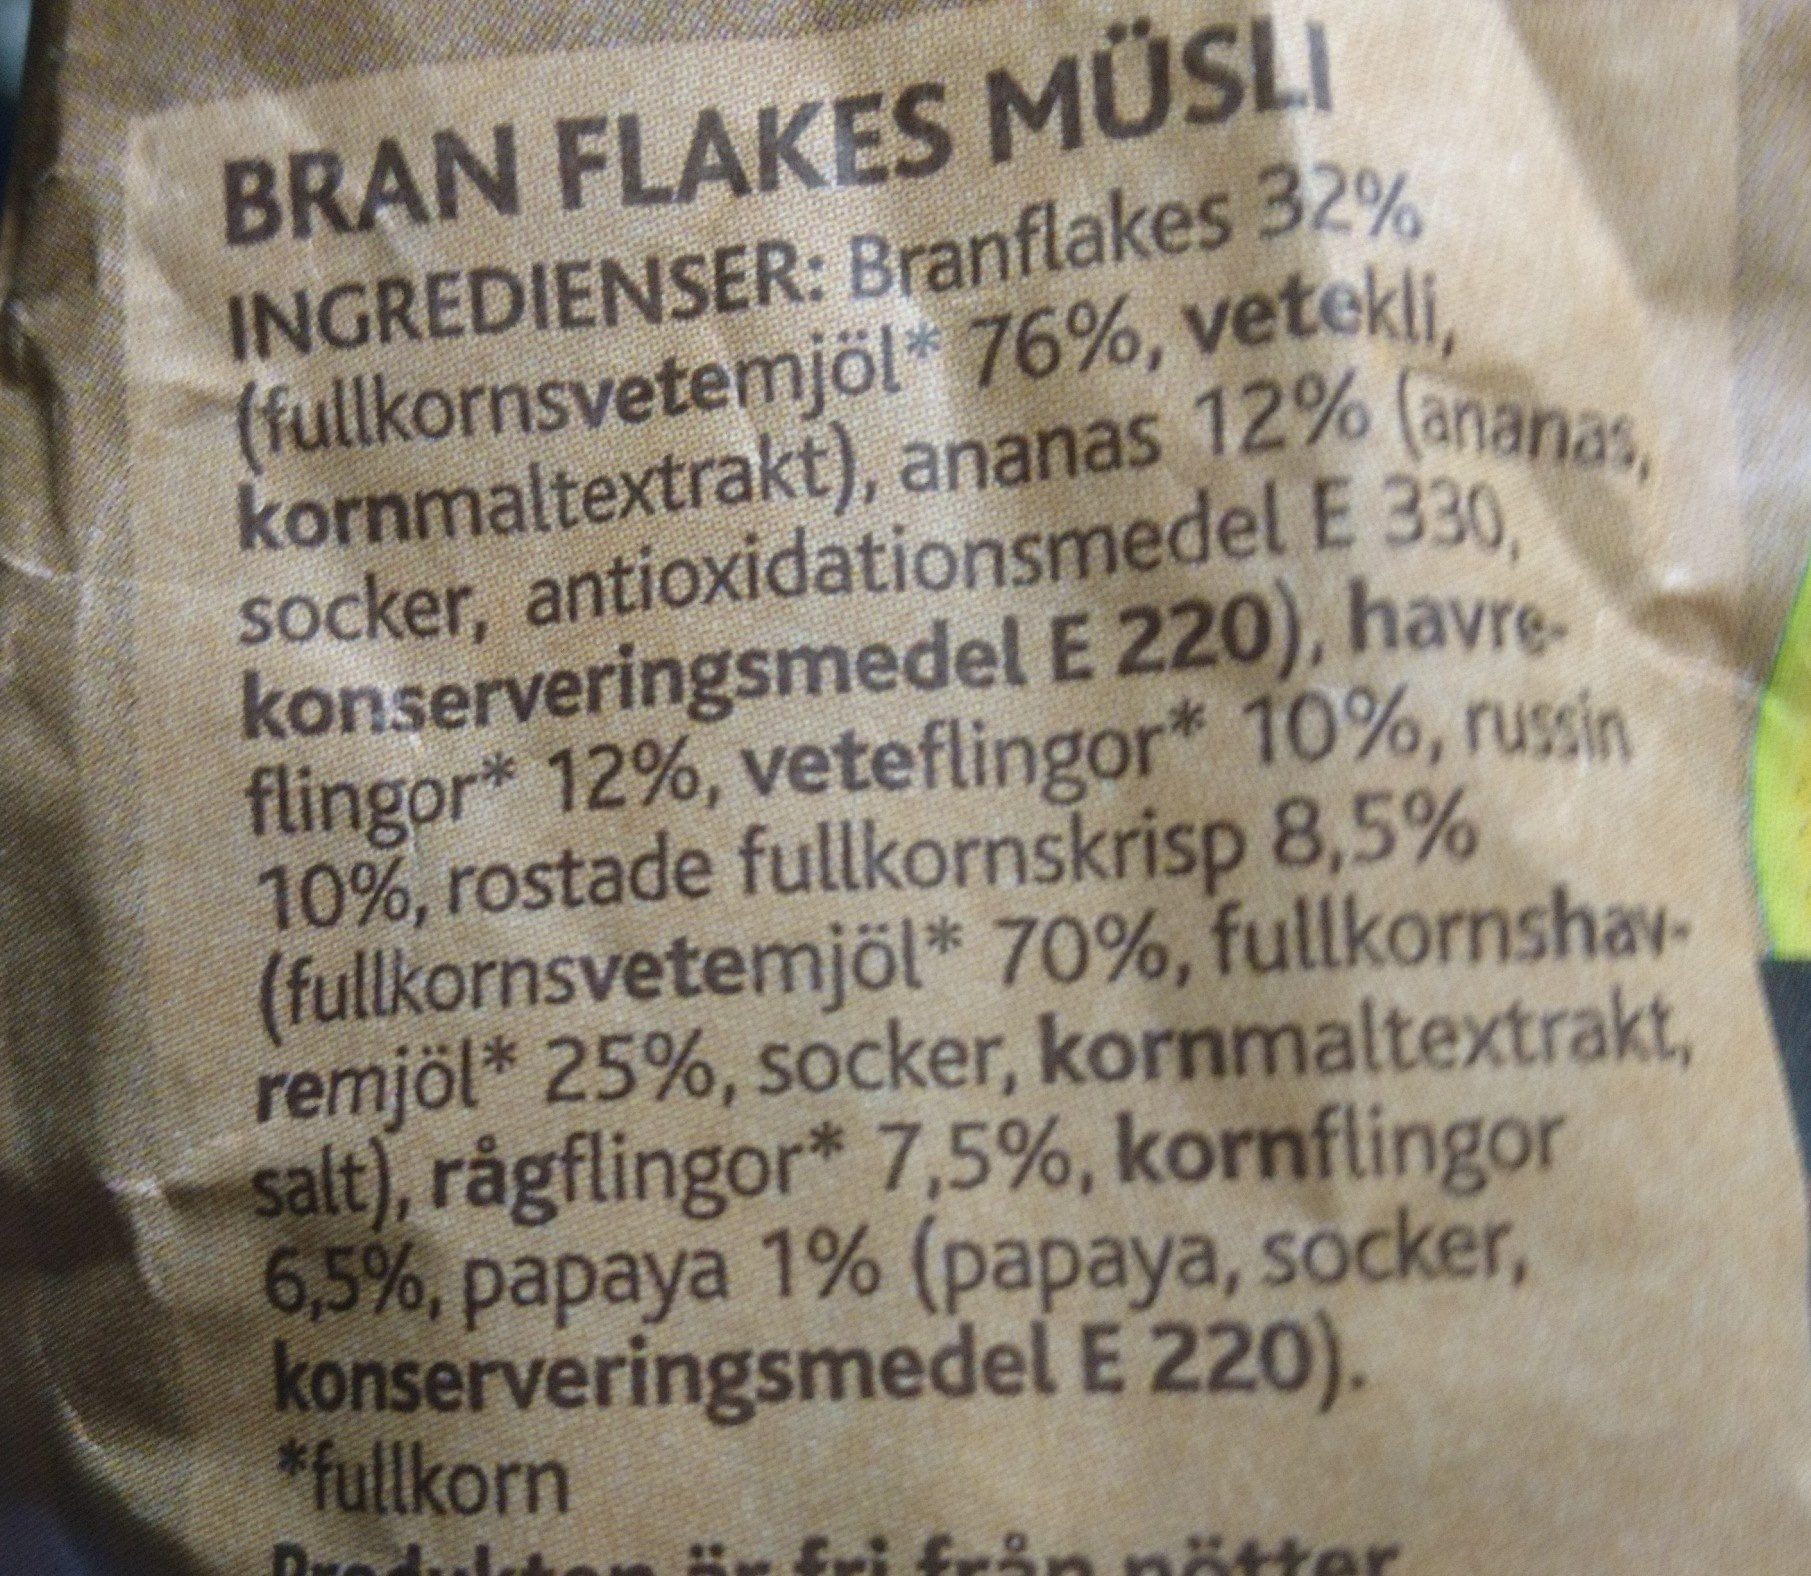 Bran Flakes Müsli - Ingredienser